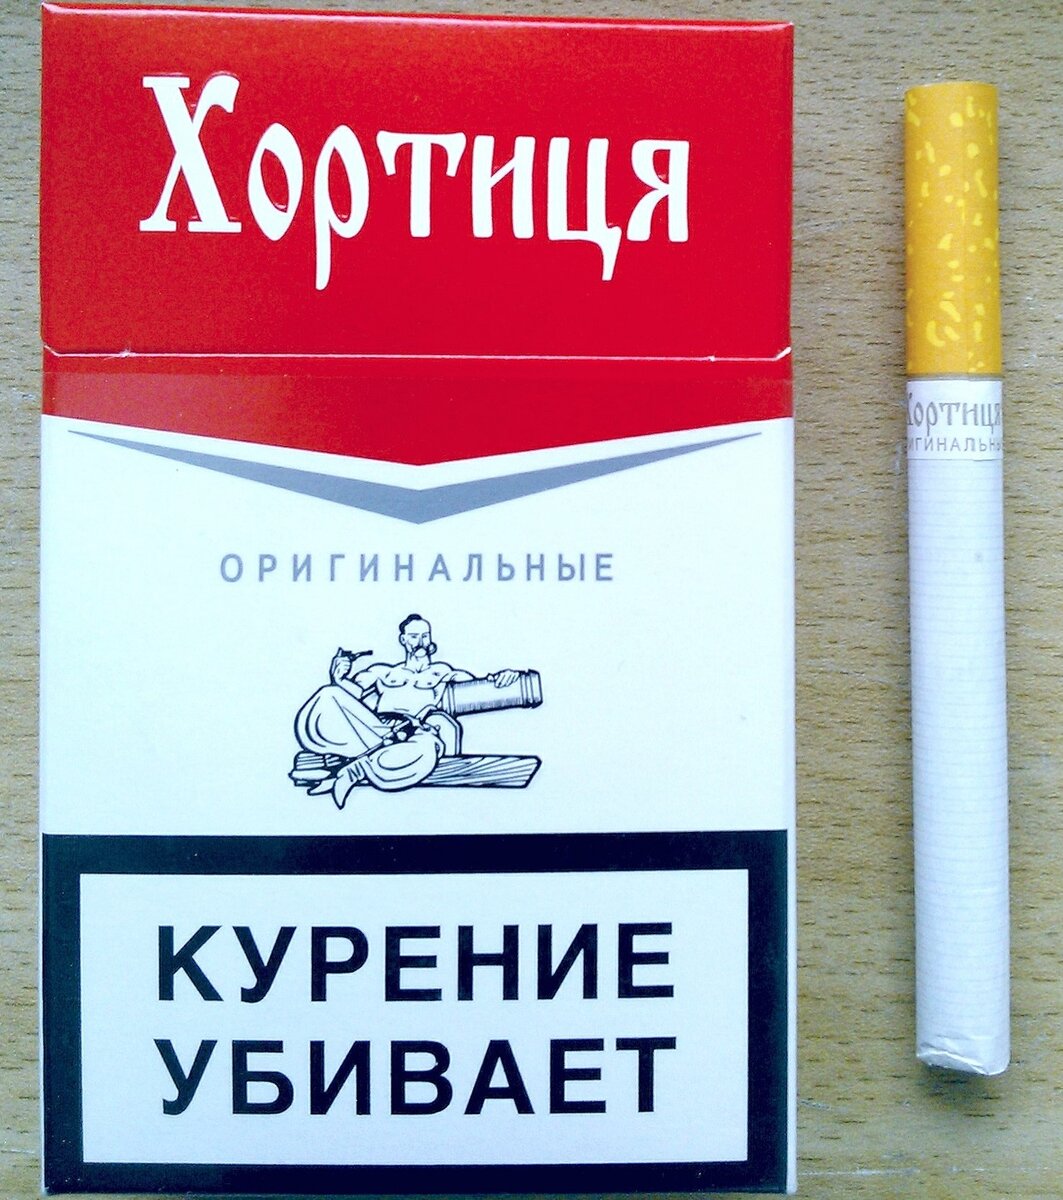 Сигареты Хортица красная